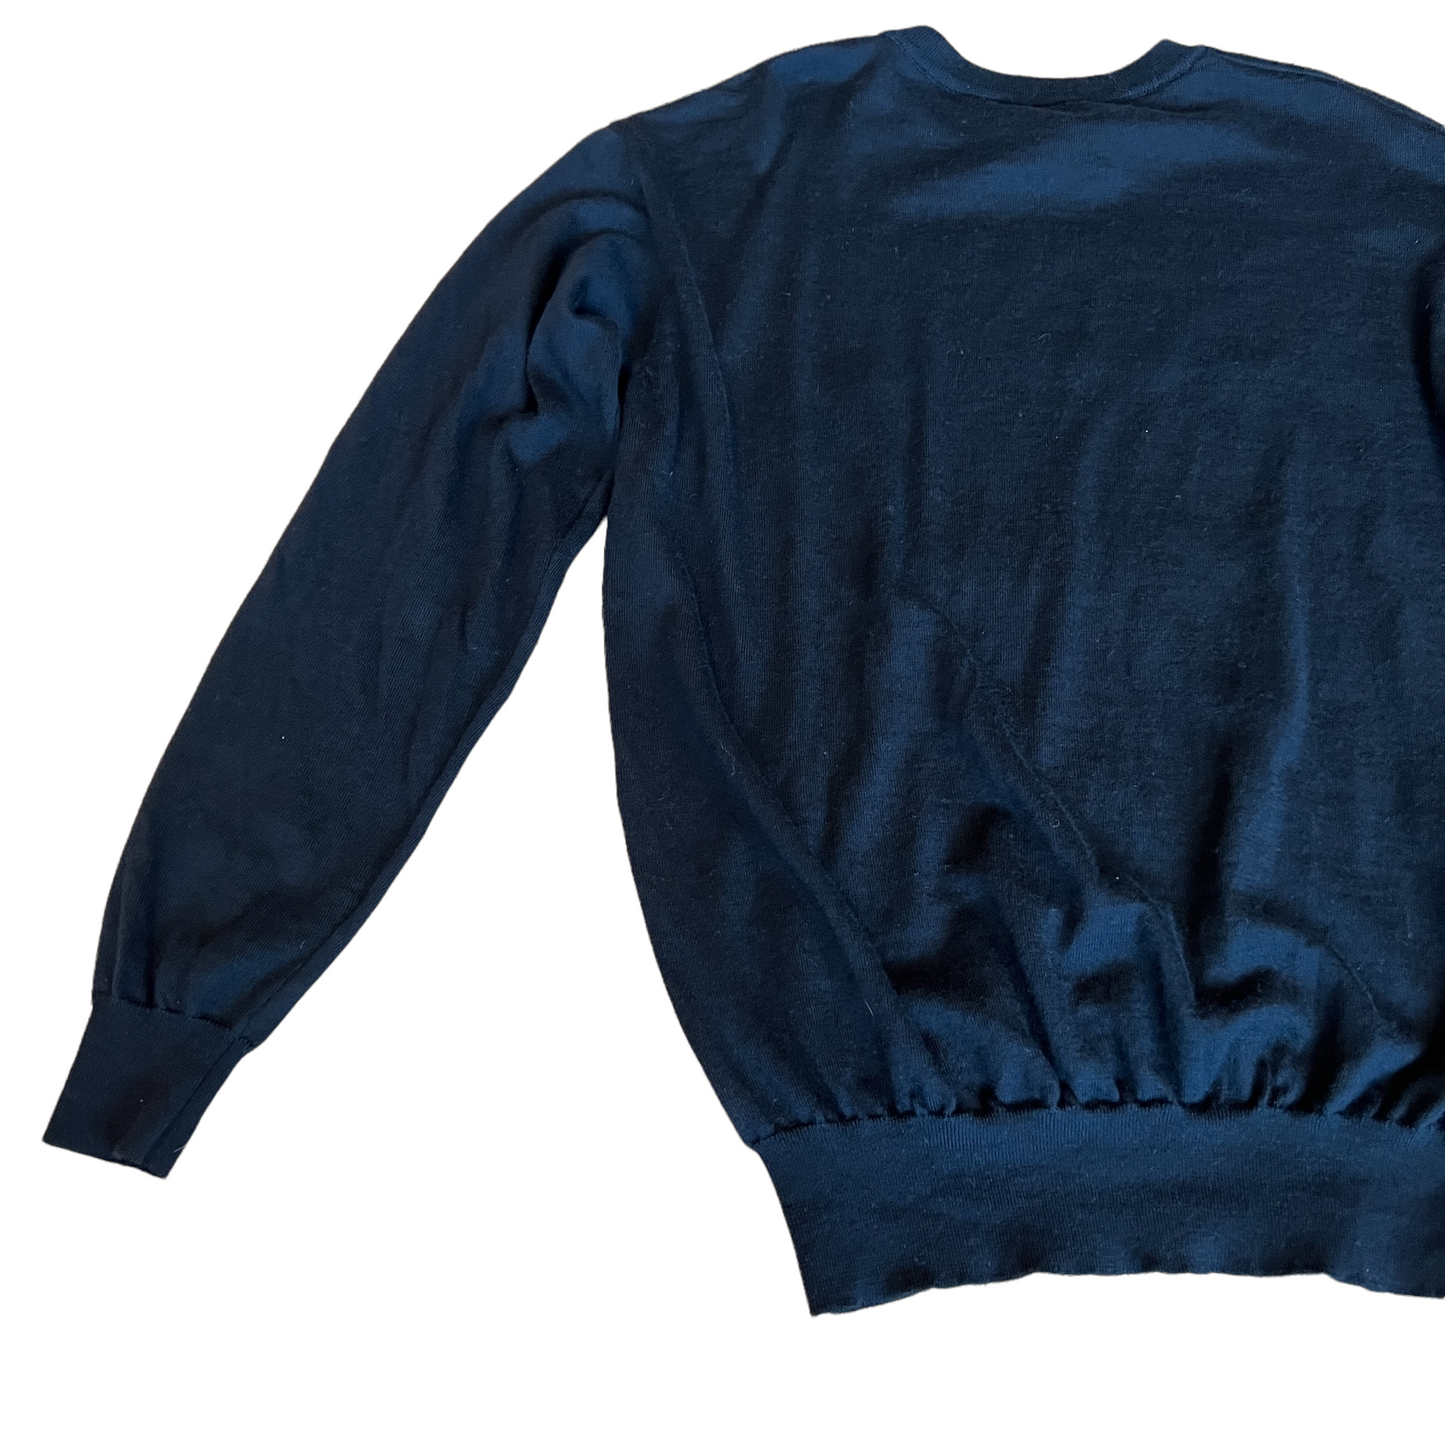 Black Wool Sweater - S